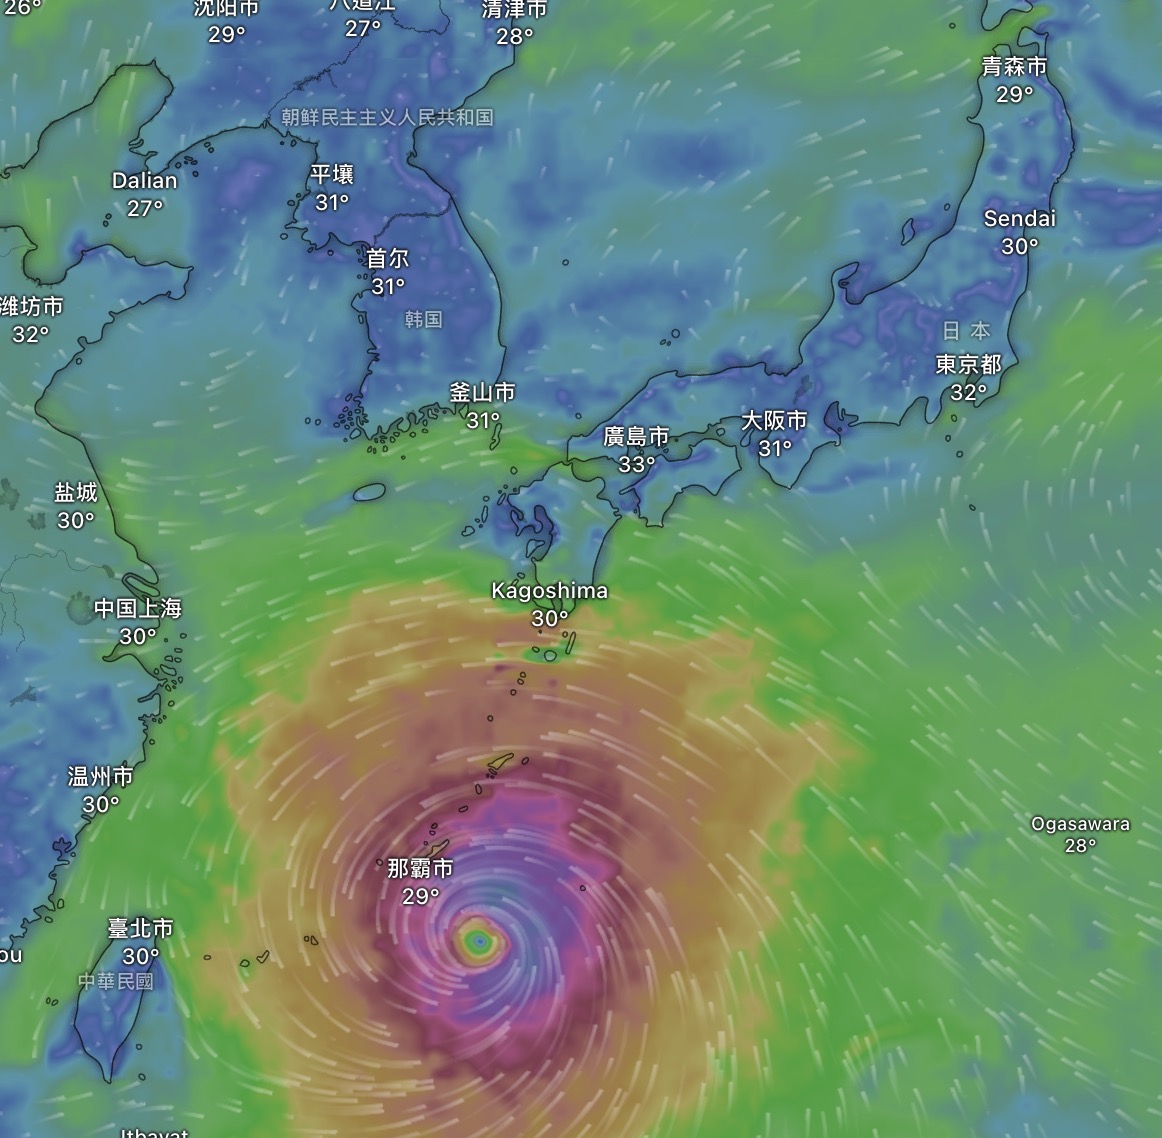 台風 6 号進路予想：台風の現在位置、予測進行ルート